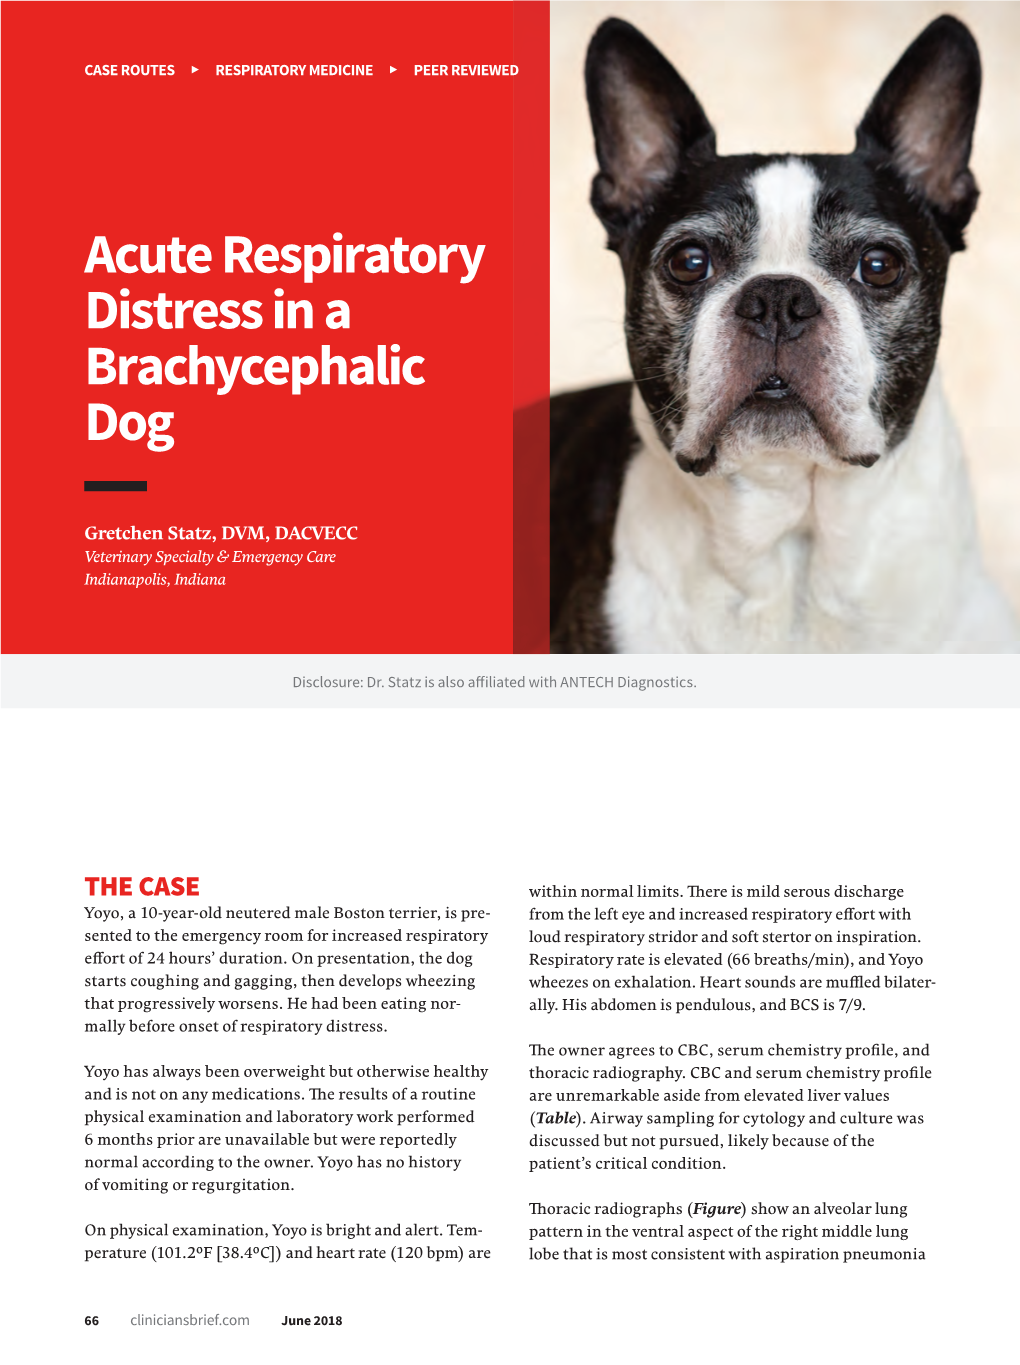 Acute Respiratory Distress in a Brachycephalic Dog